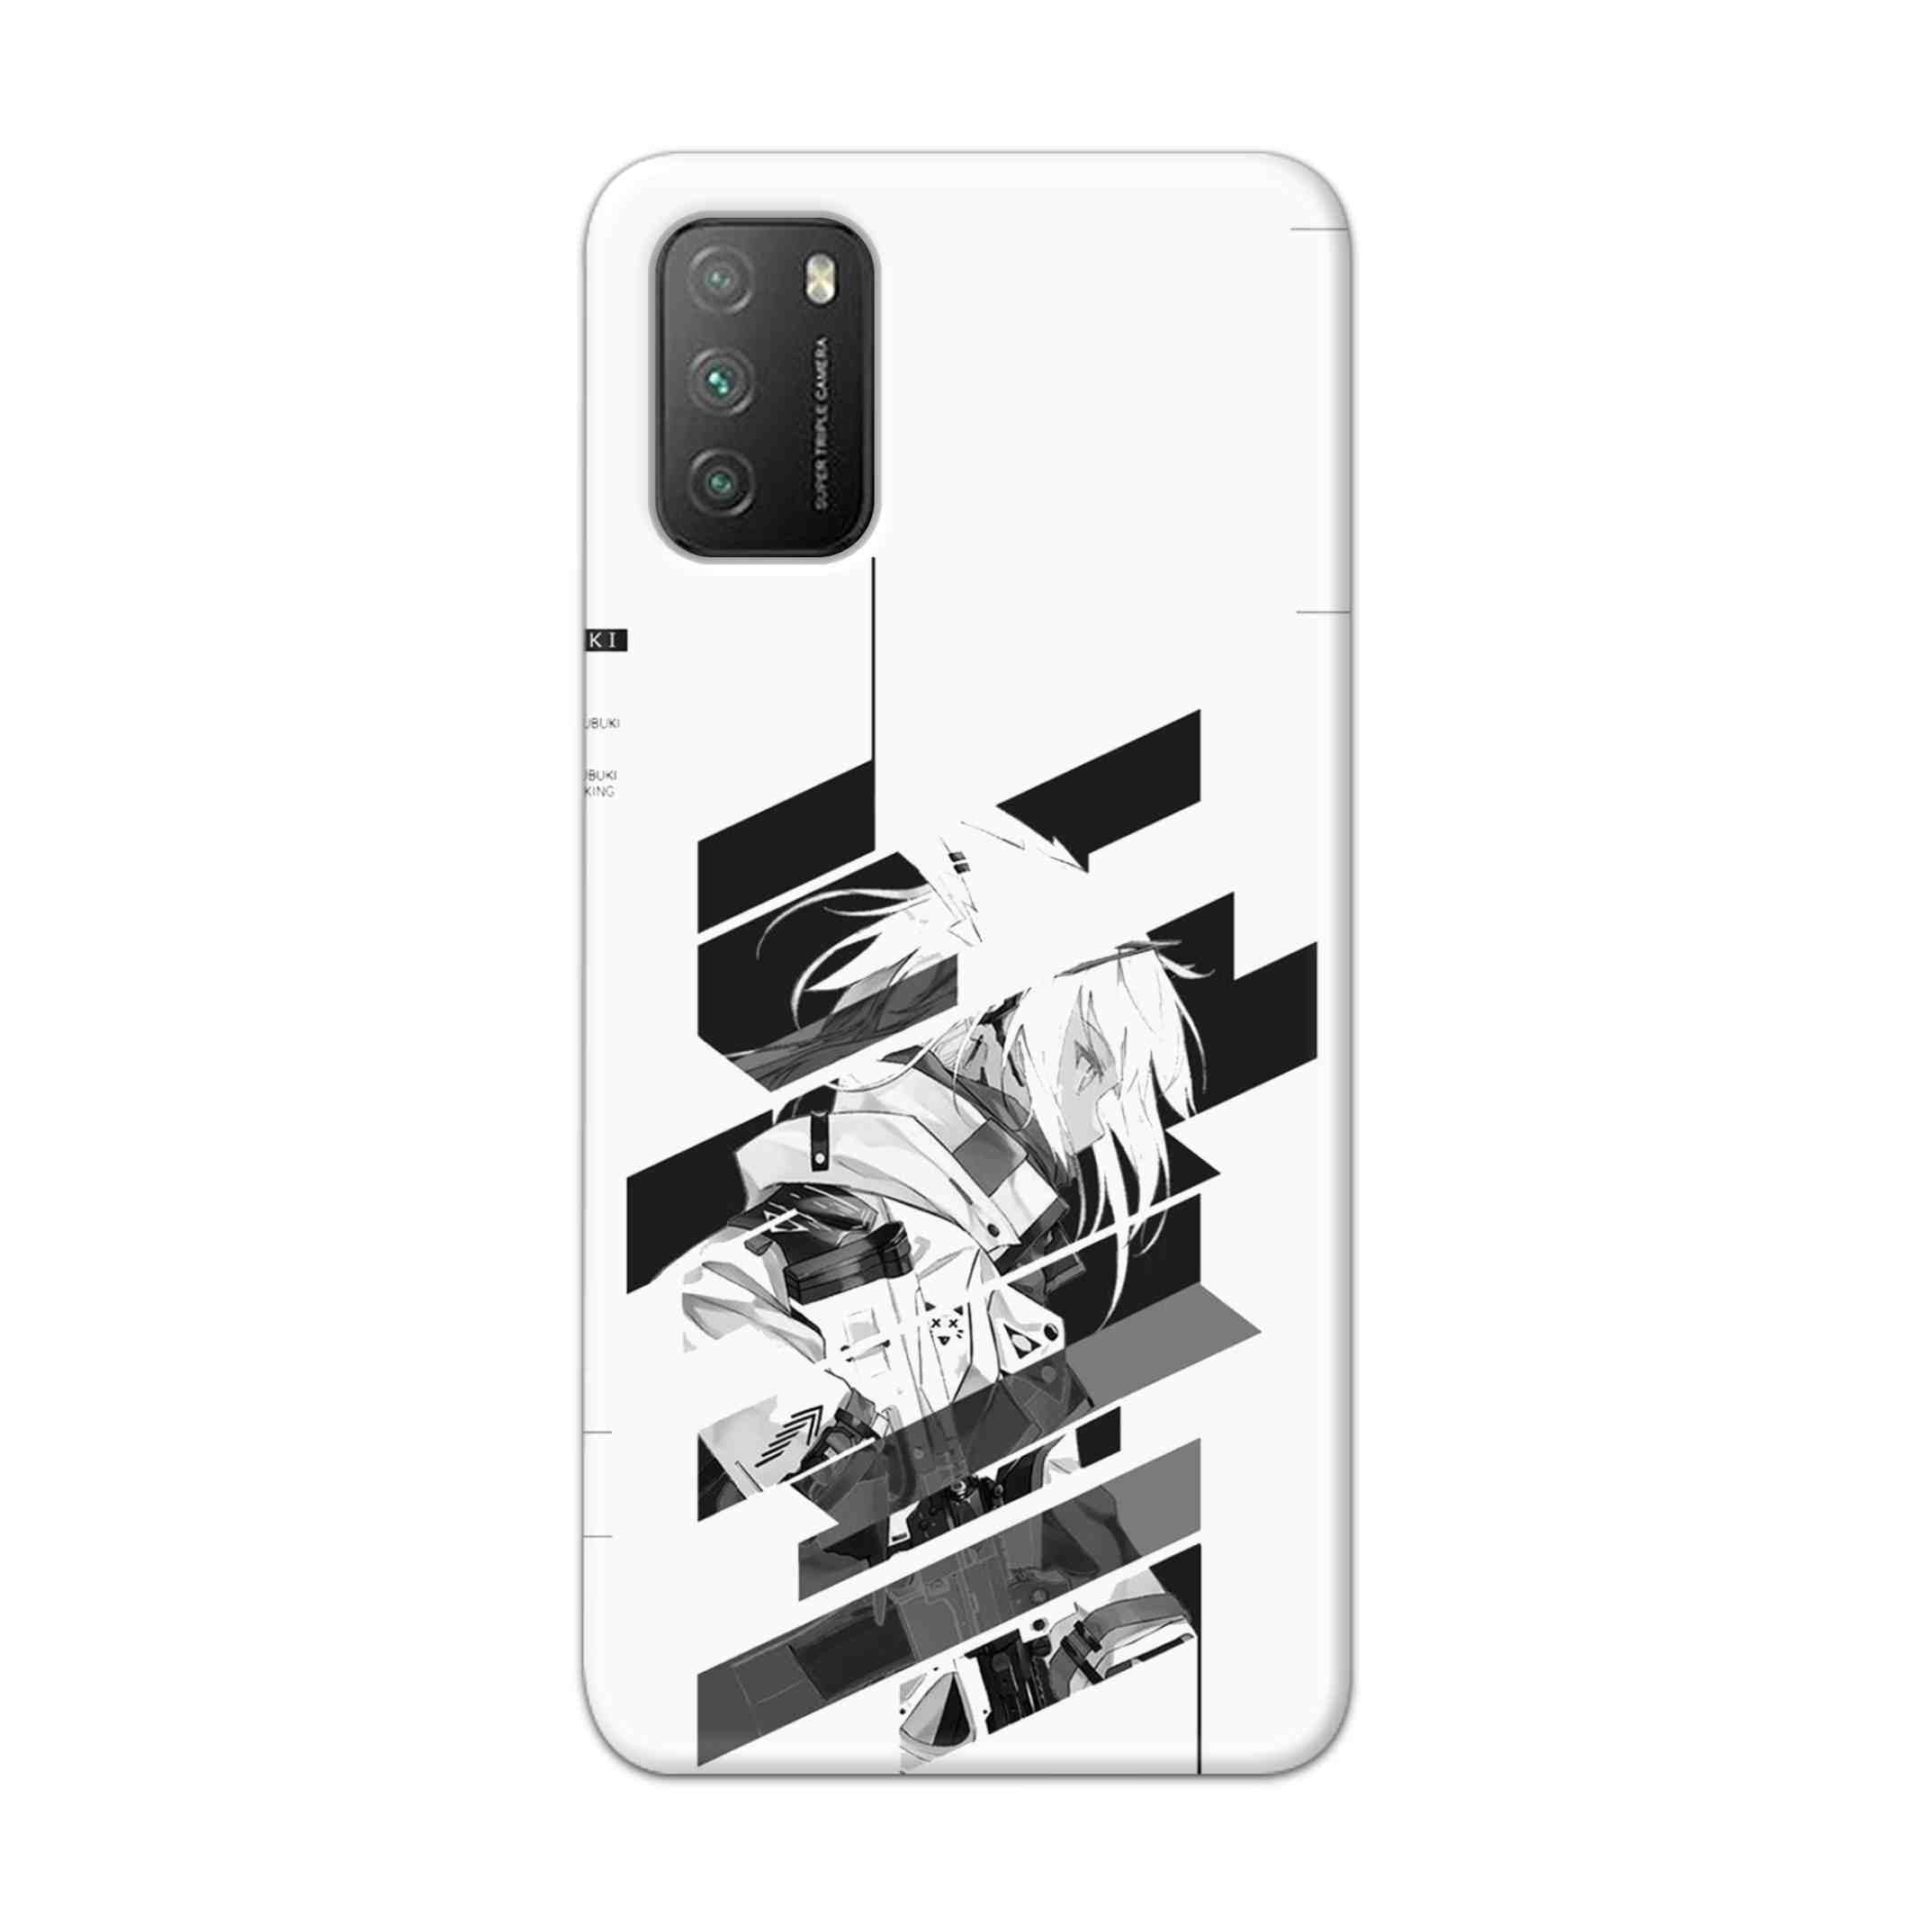 Buy Fubuki Hard Back Mobile Phone Case Cover For Poco M3 Online